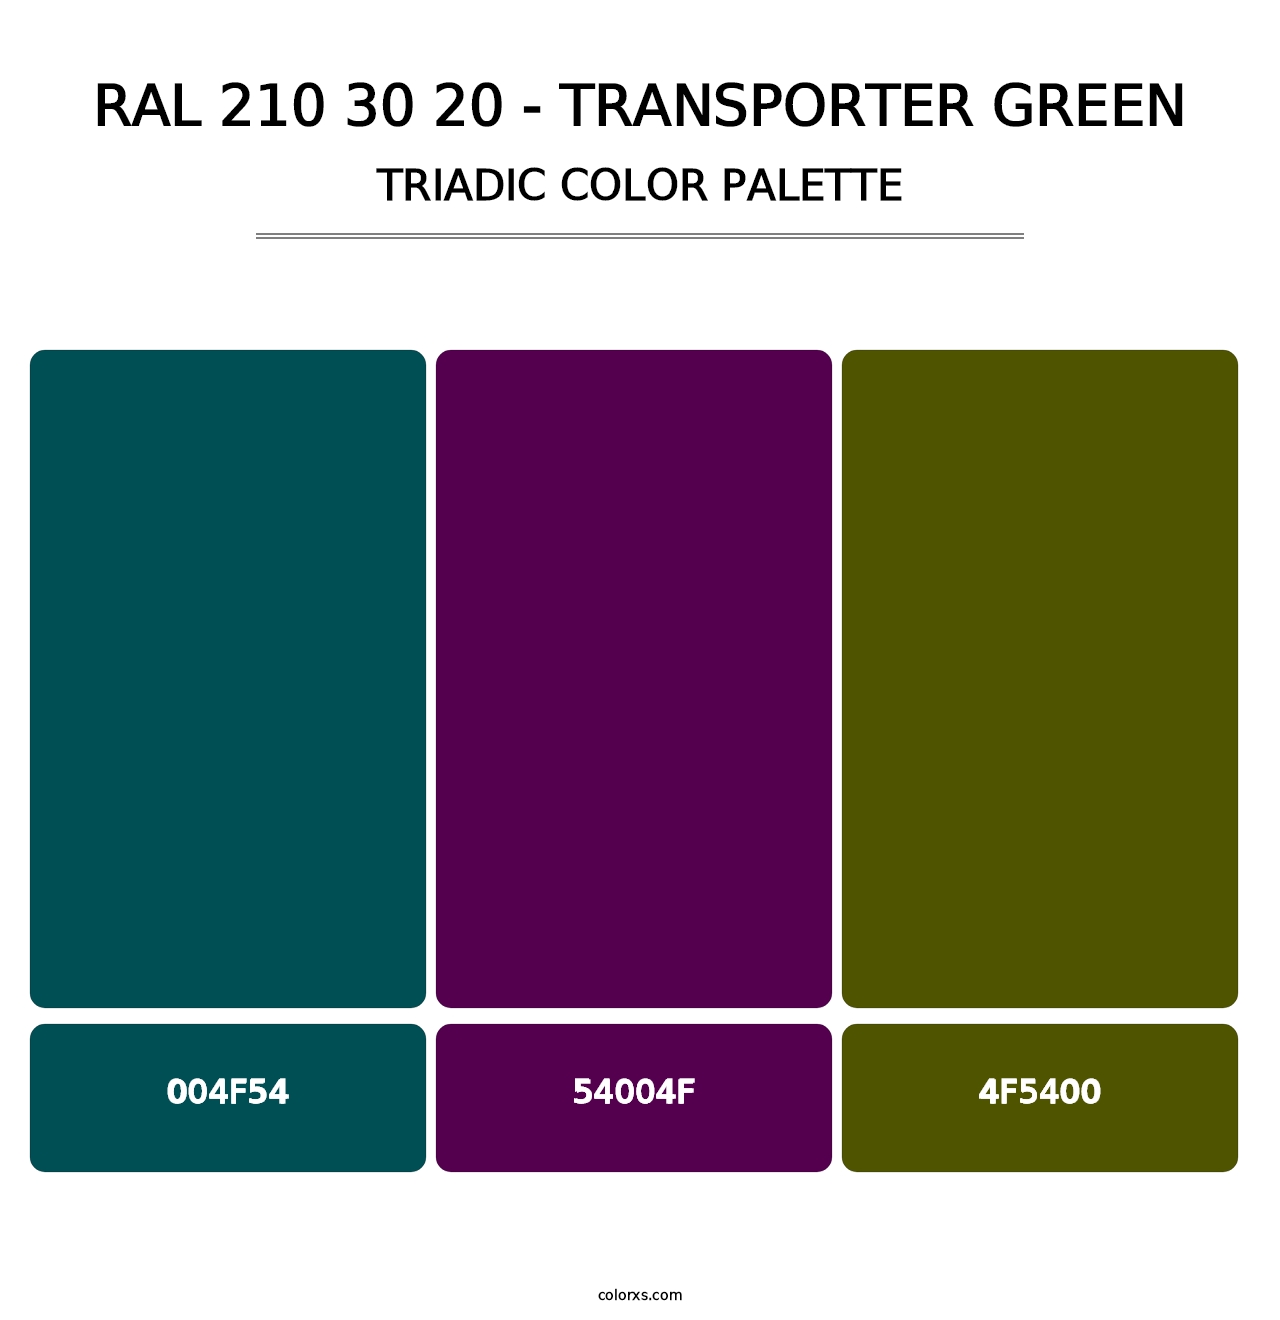 RAL 210 30 20 - Transporter Green - Triadic Color Palette